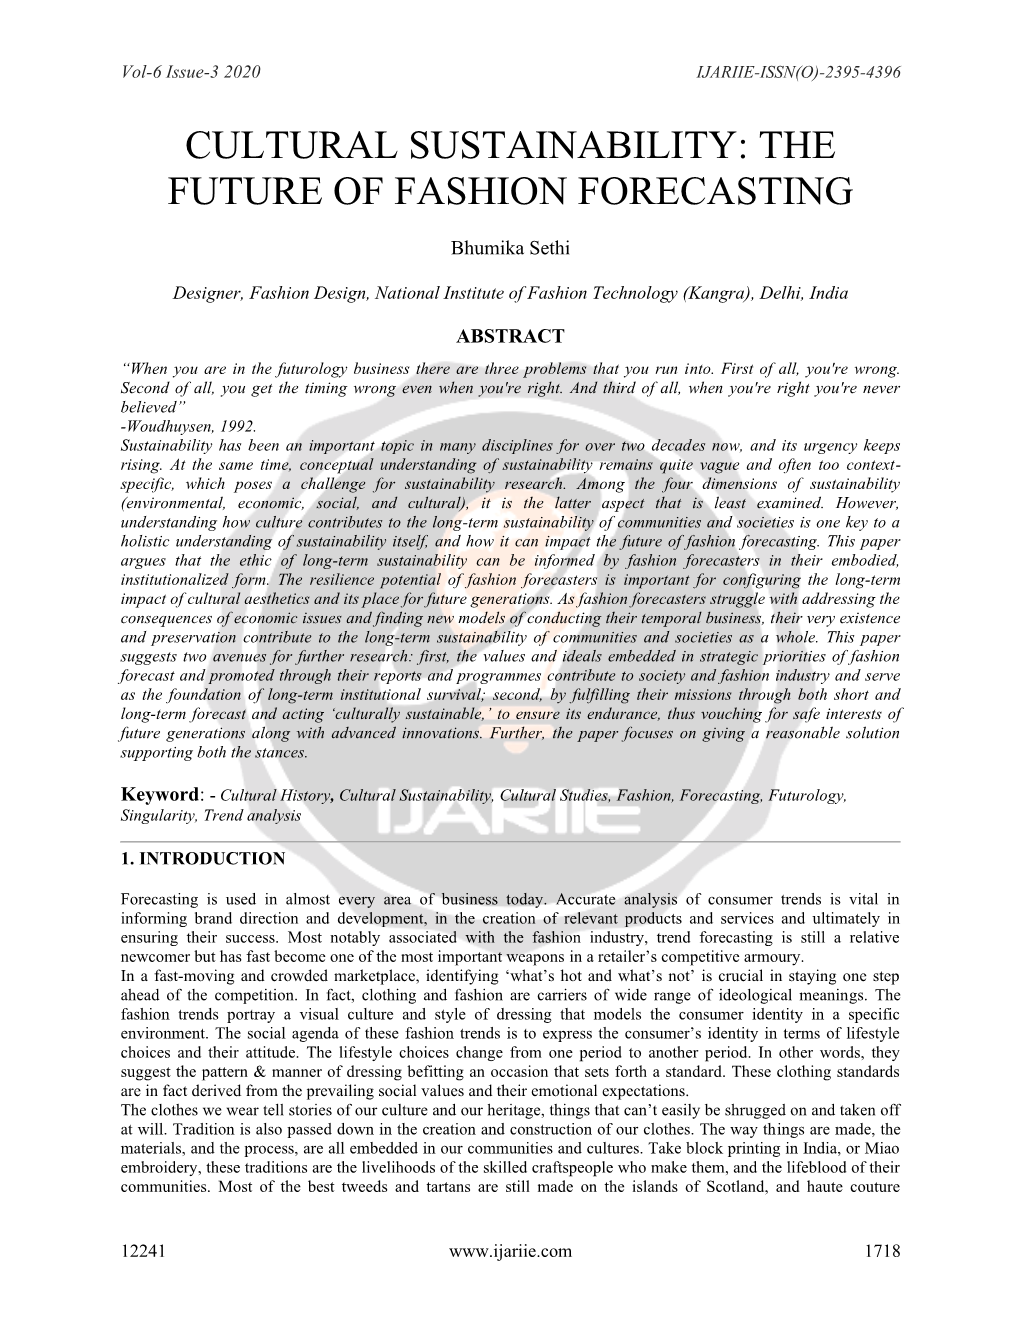 Cultural Sustainability: the Future of Fashion Forecasting